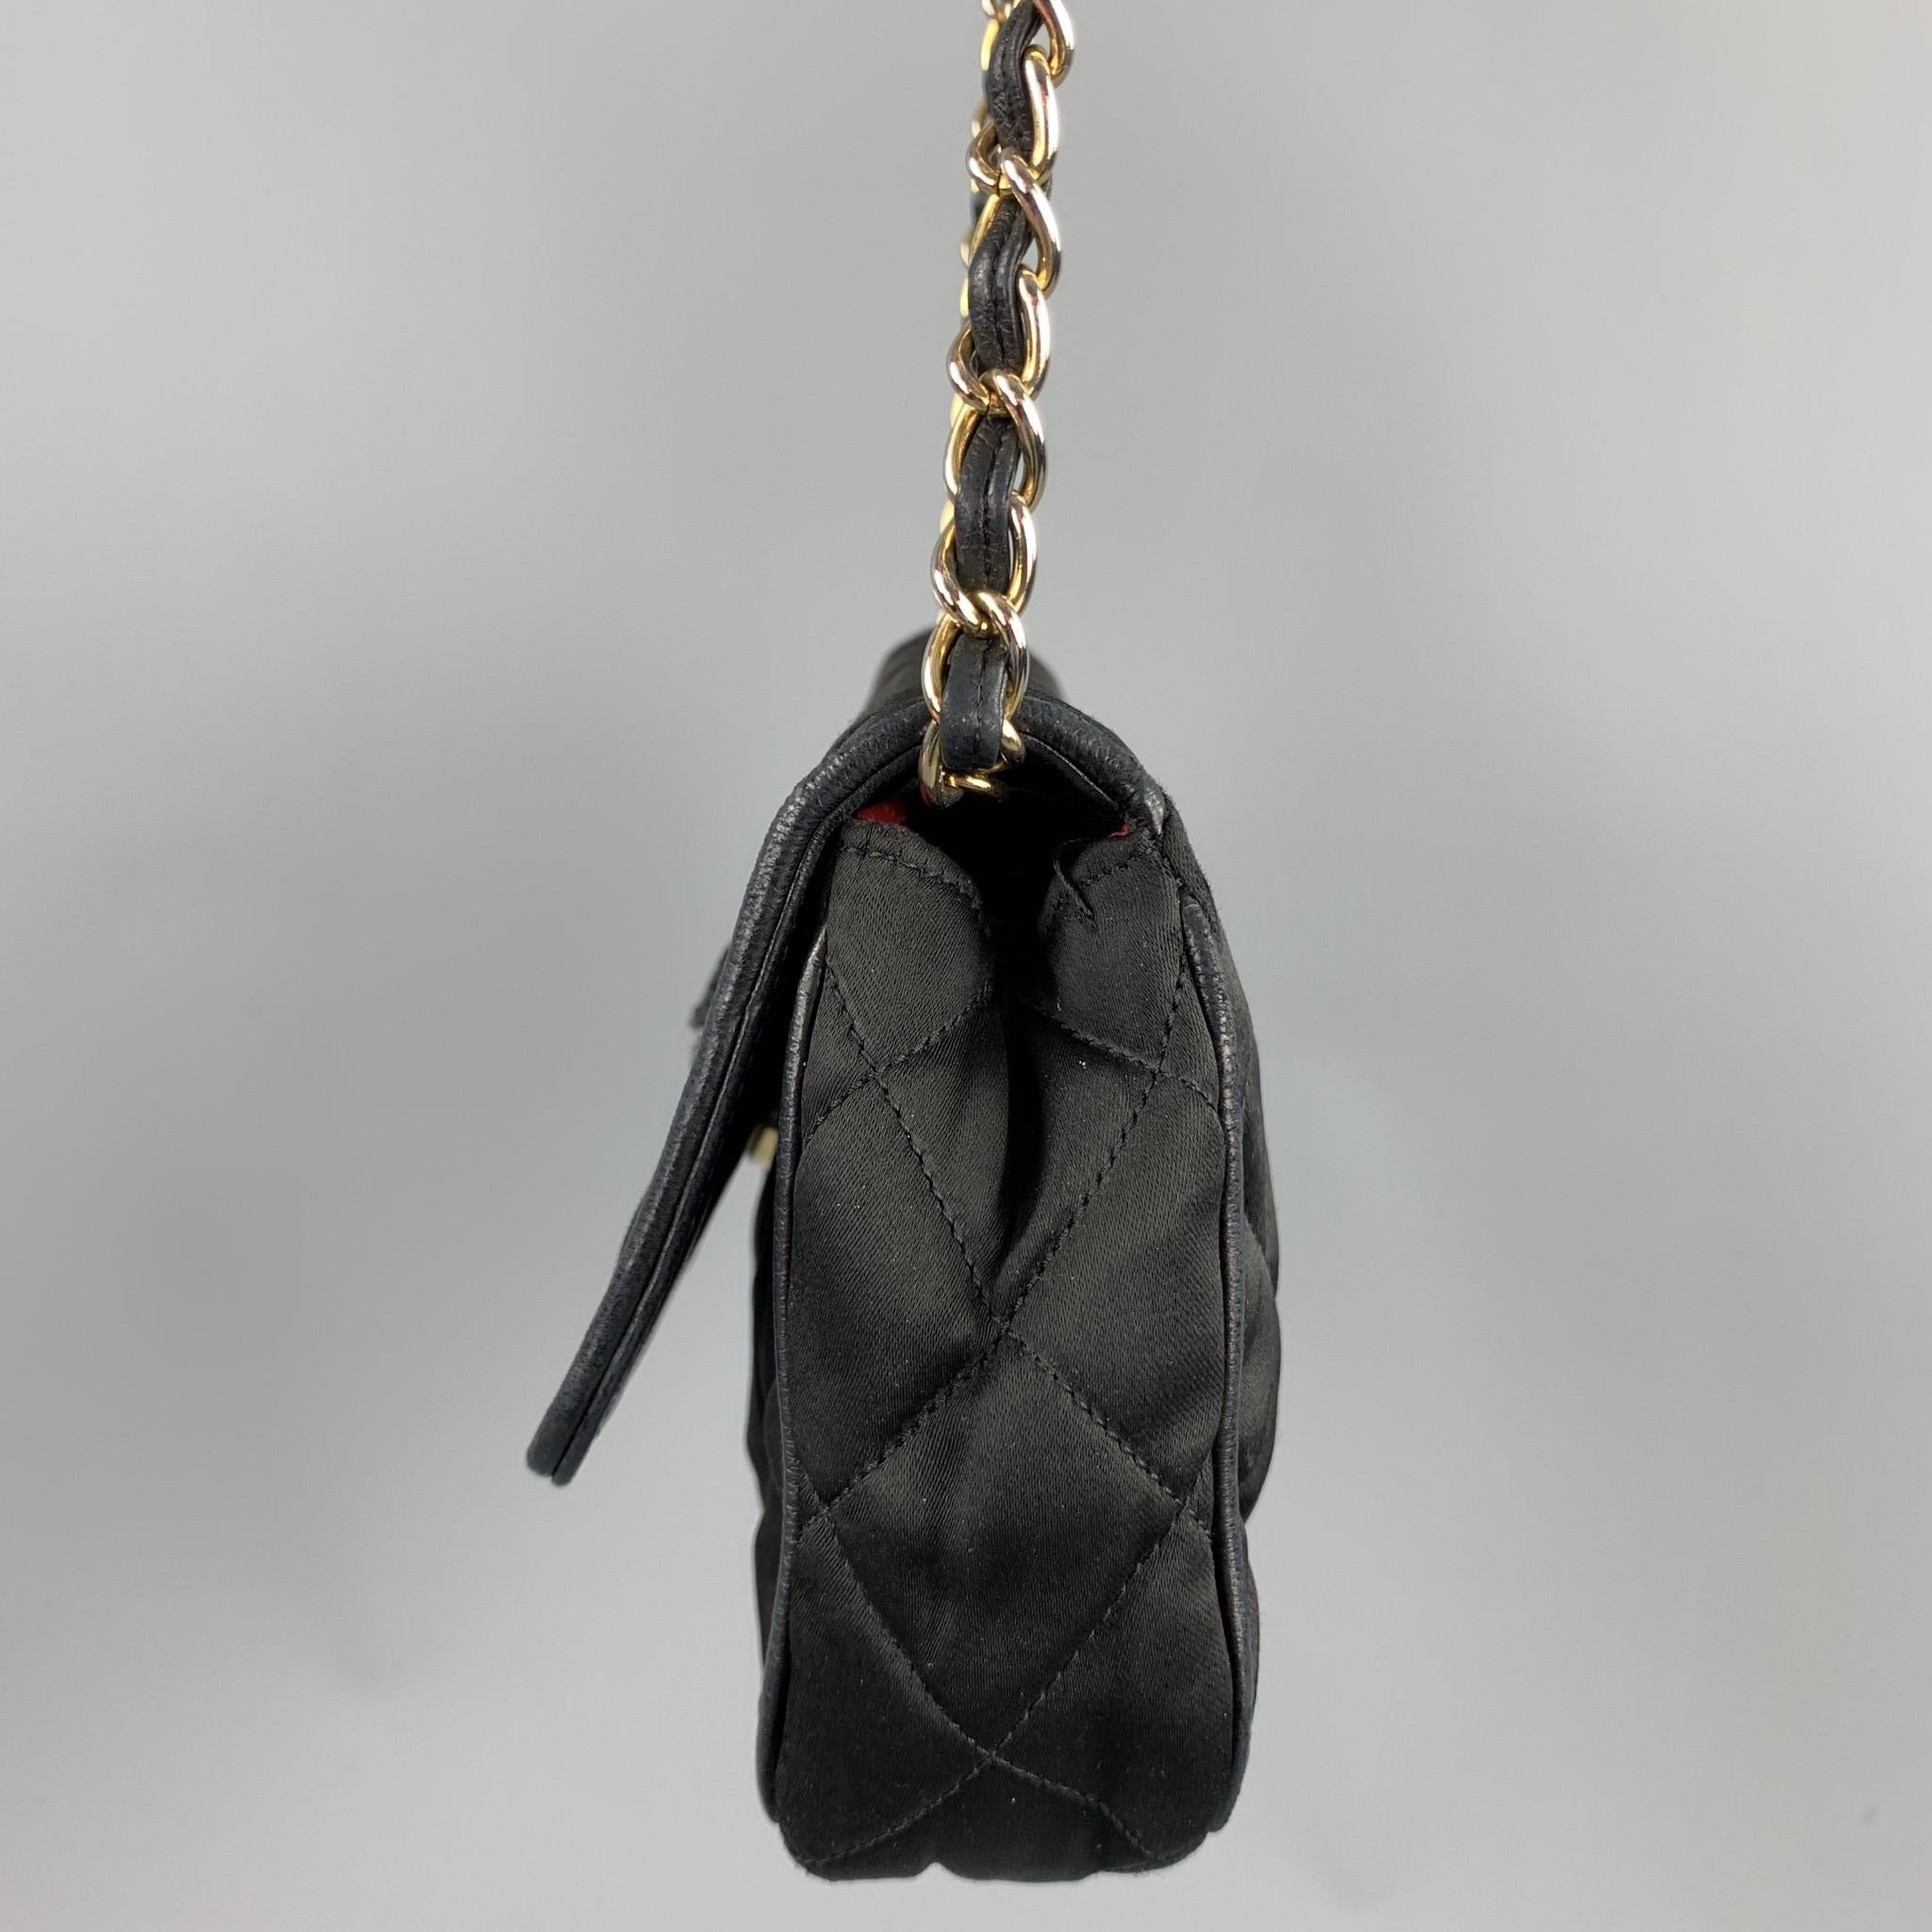 Vintage CHANEL Black Quilted Nylon Leather Trim Cross Body Handbag 1